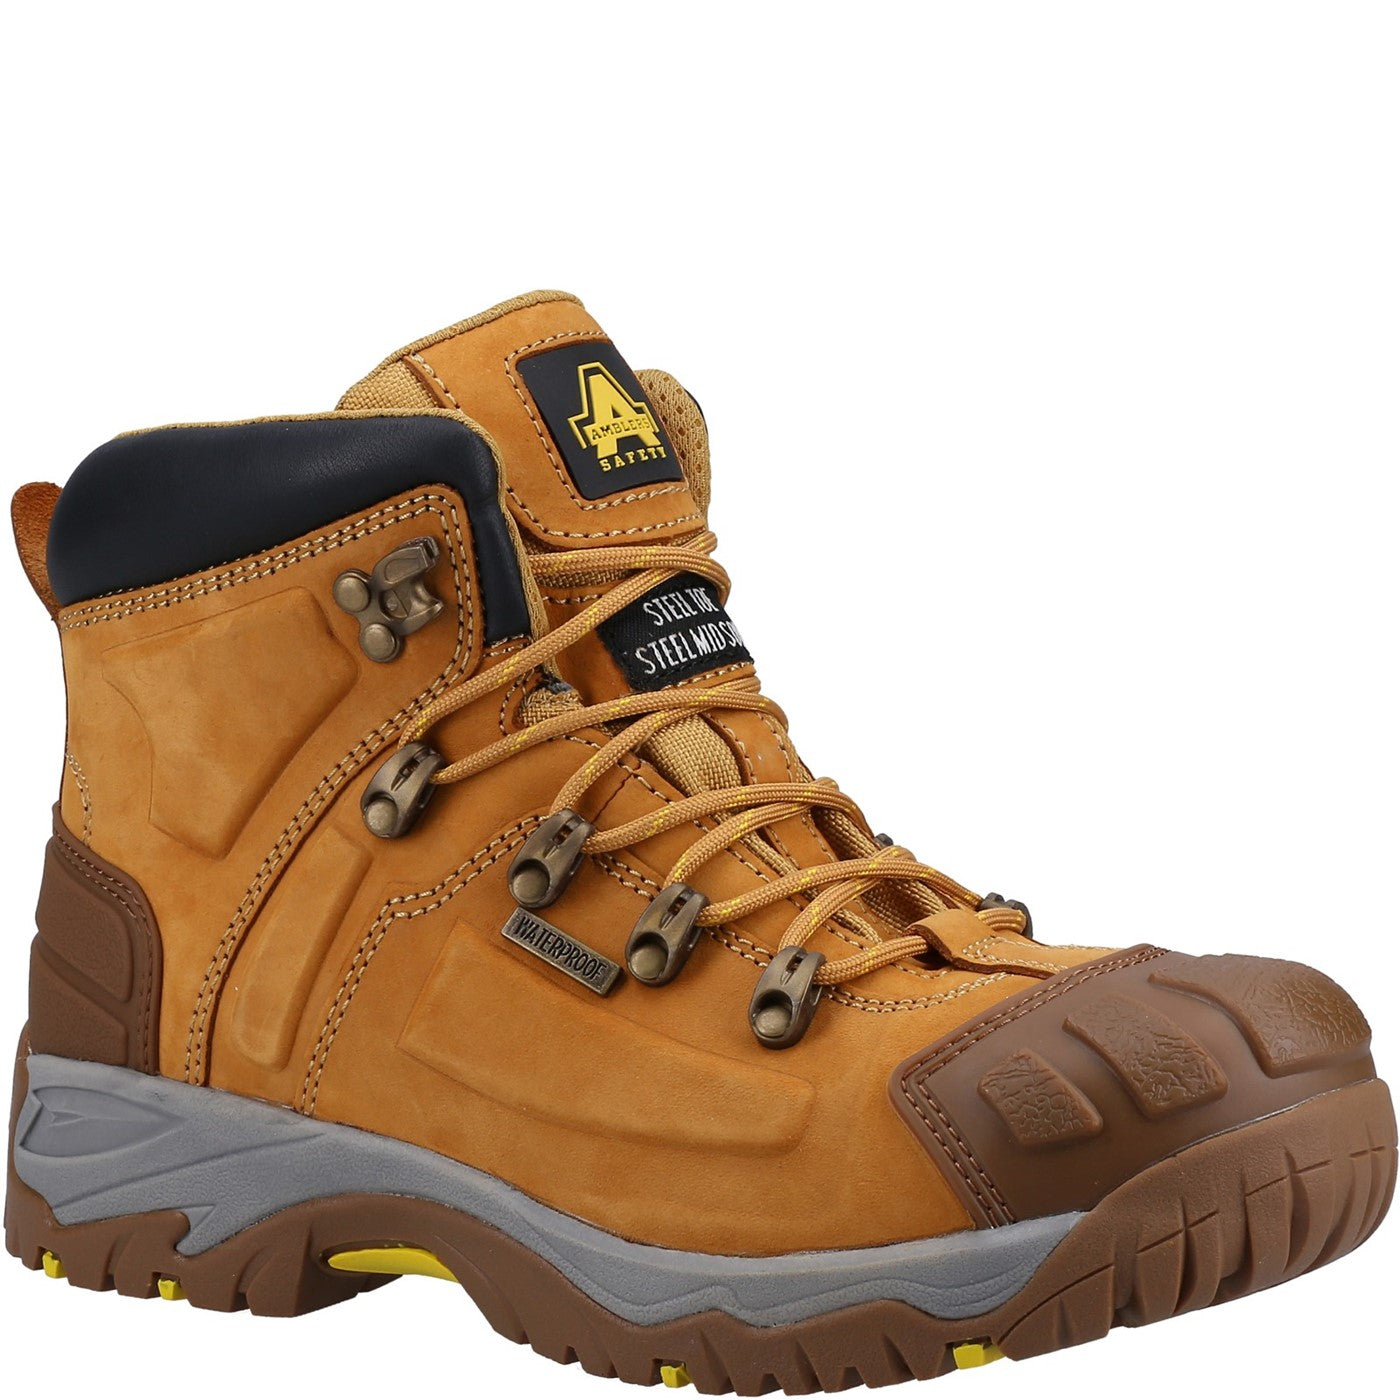 Men's Amblers Safety 33 Boots